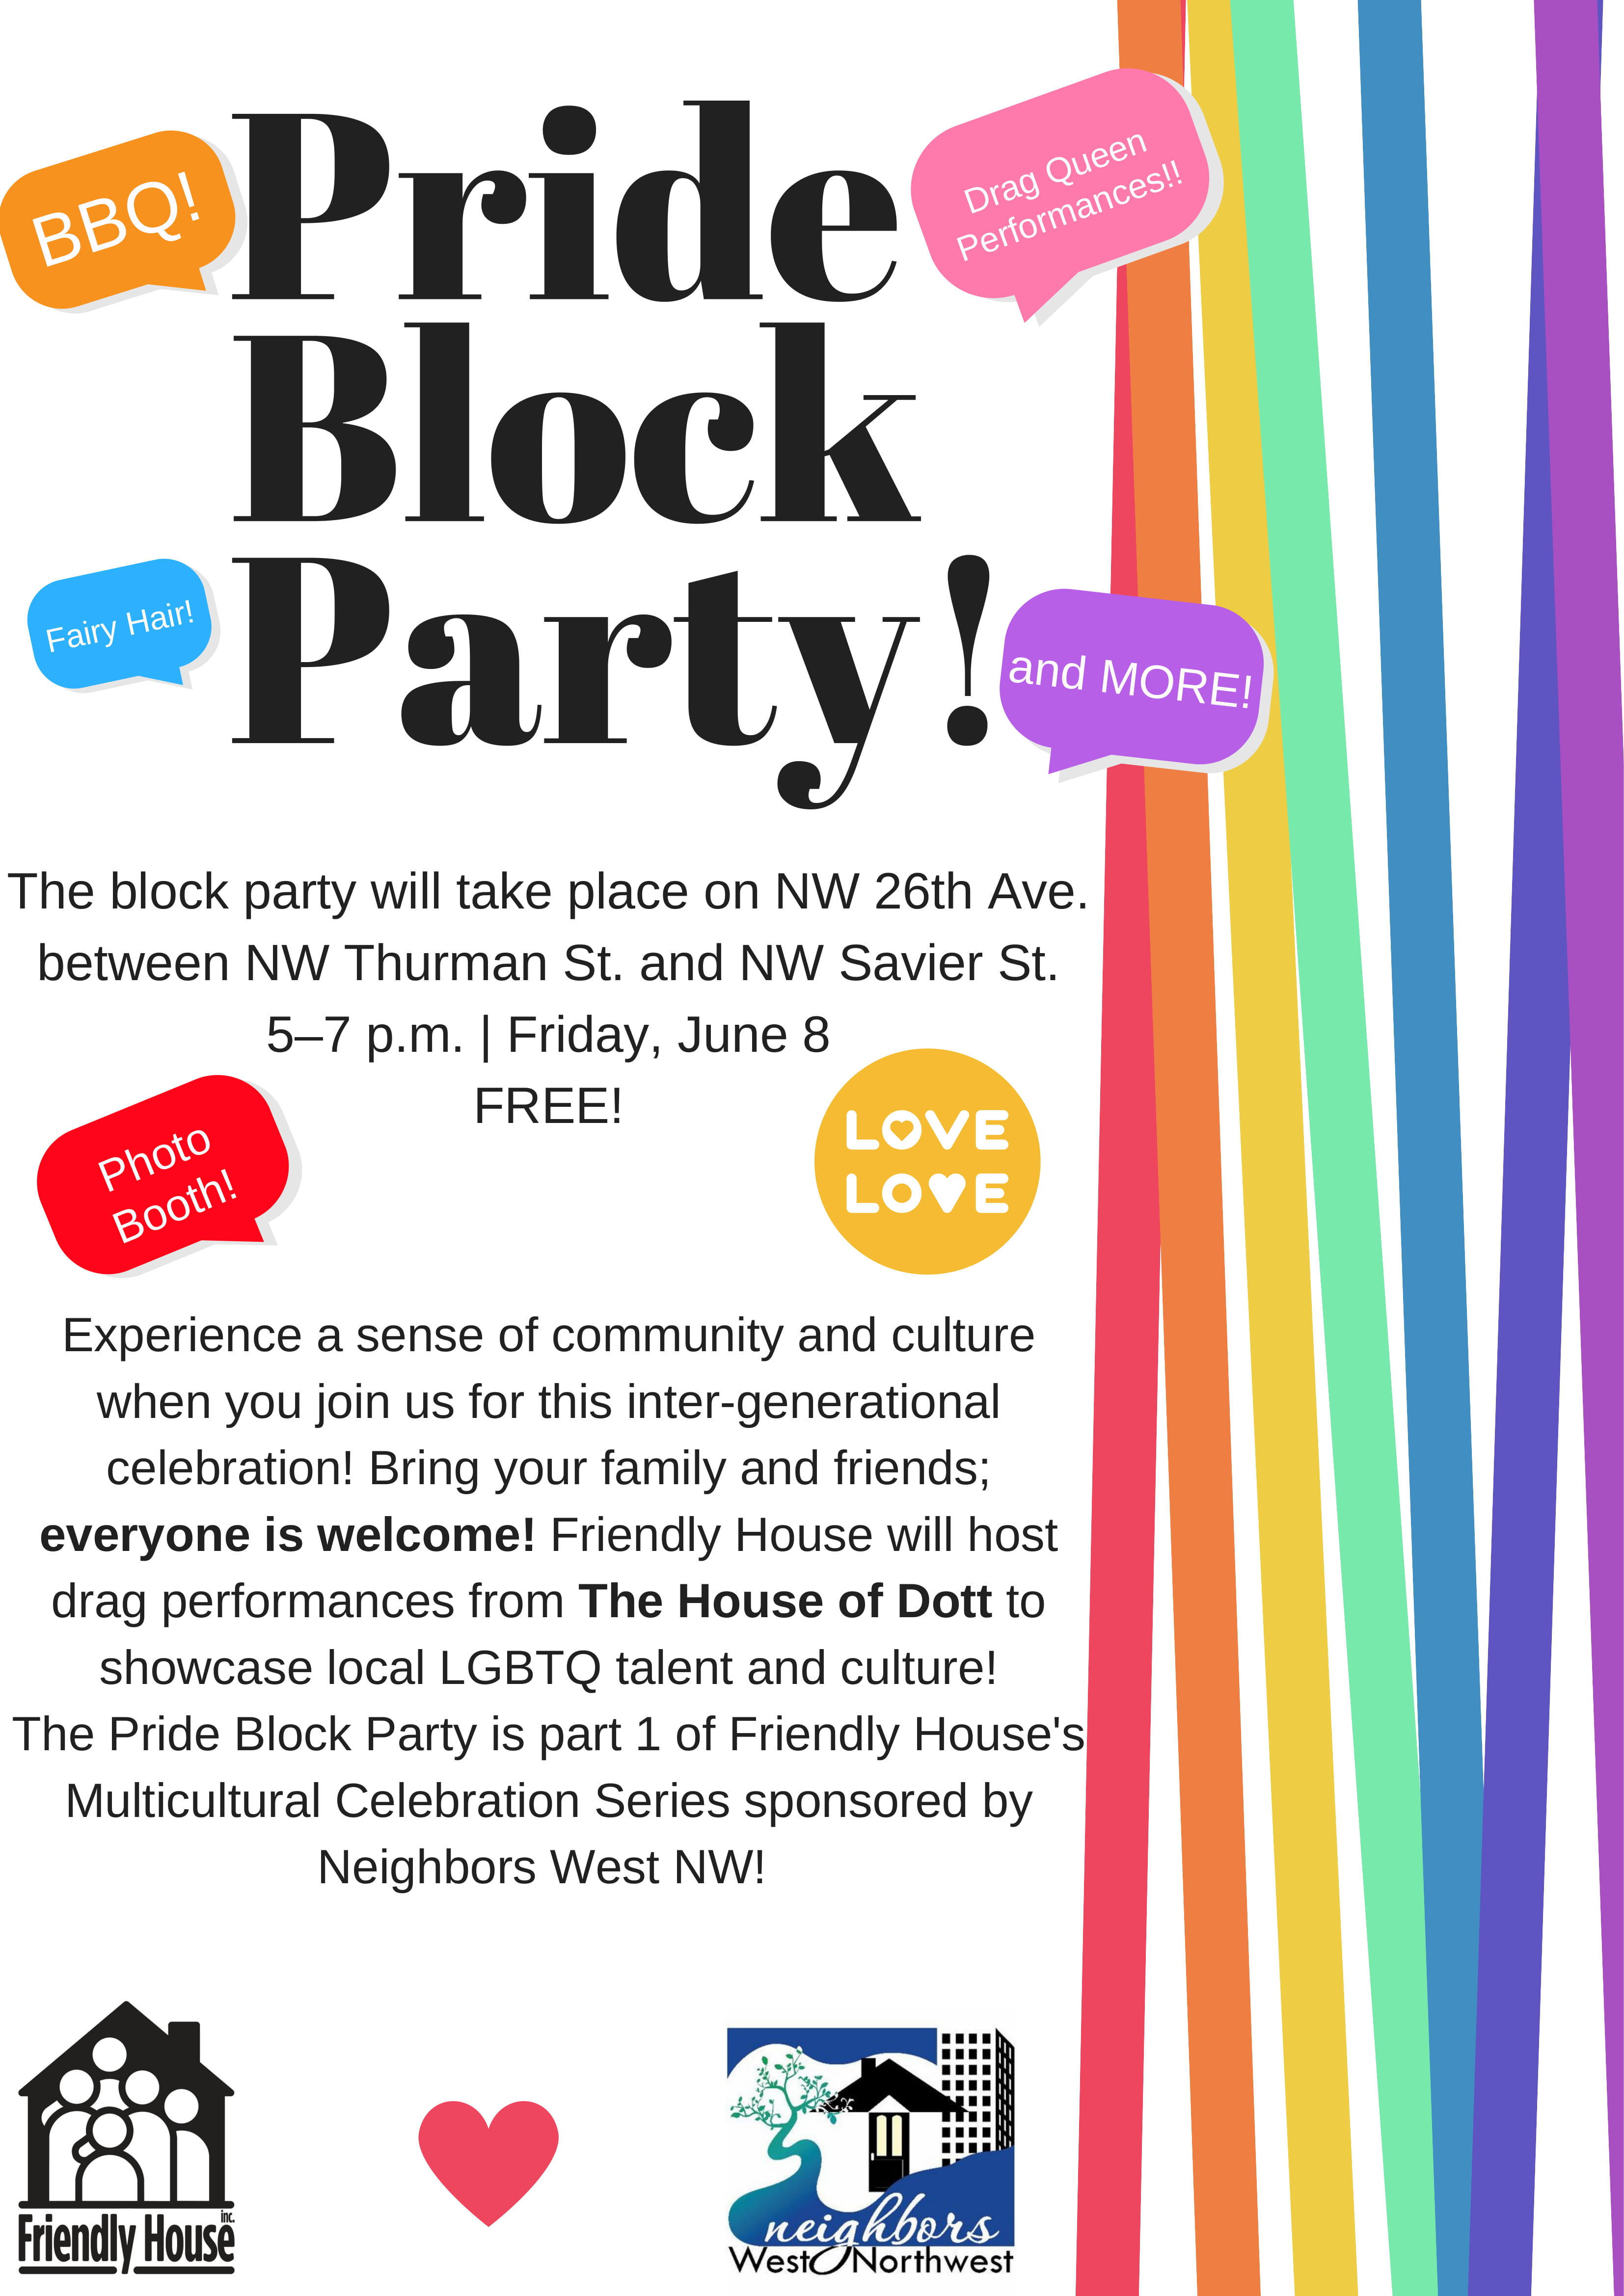 Pride Block Party at Friendly House Neighbors WestNorthwest